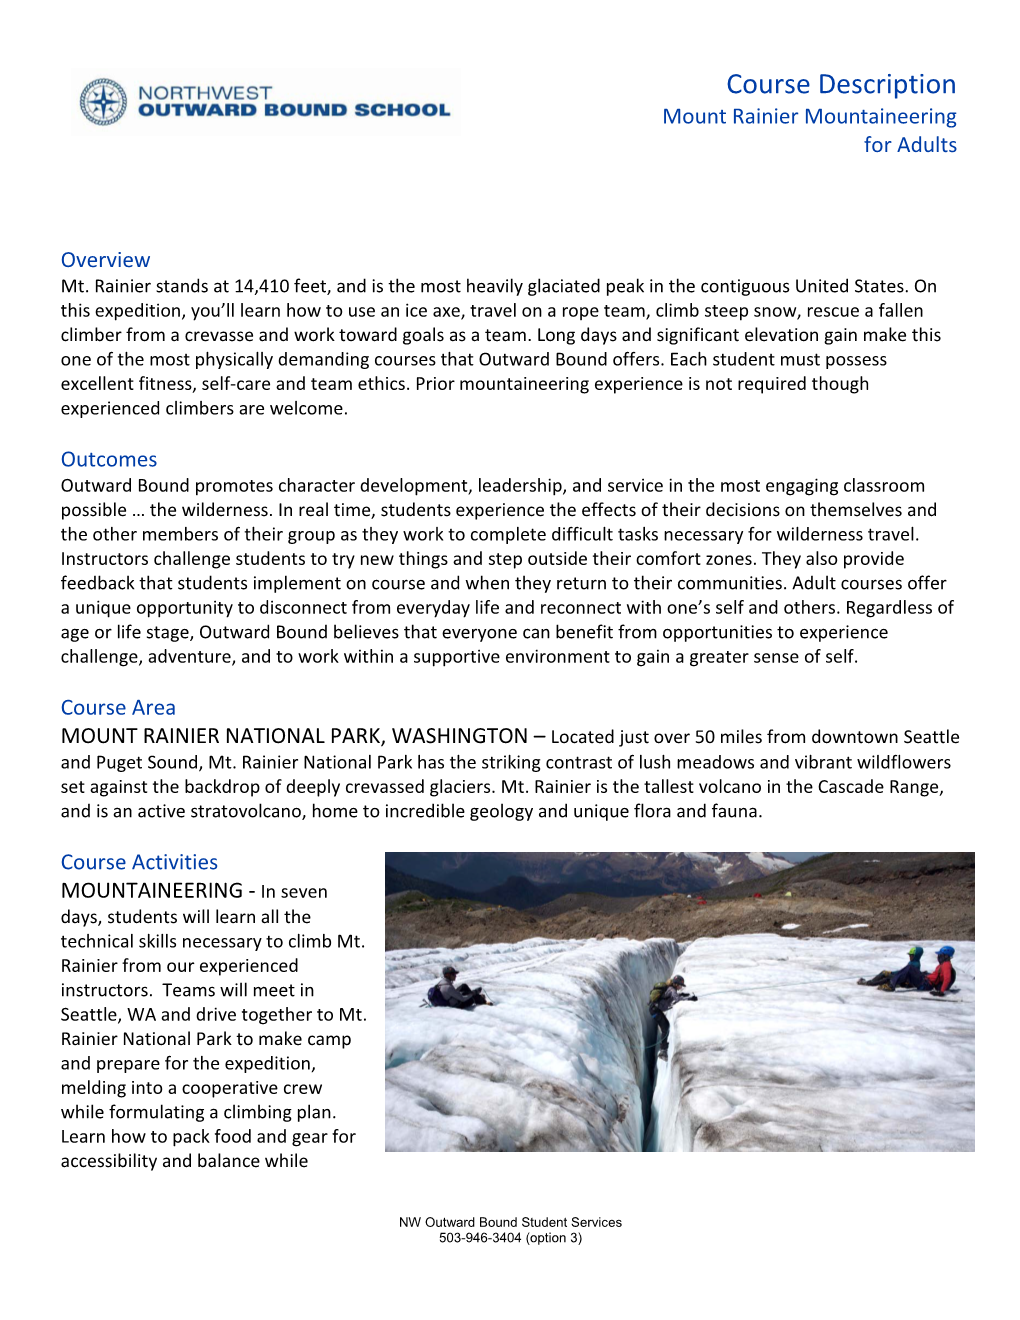 Course Description Mount Rainier Mountaineering for Adults